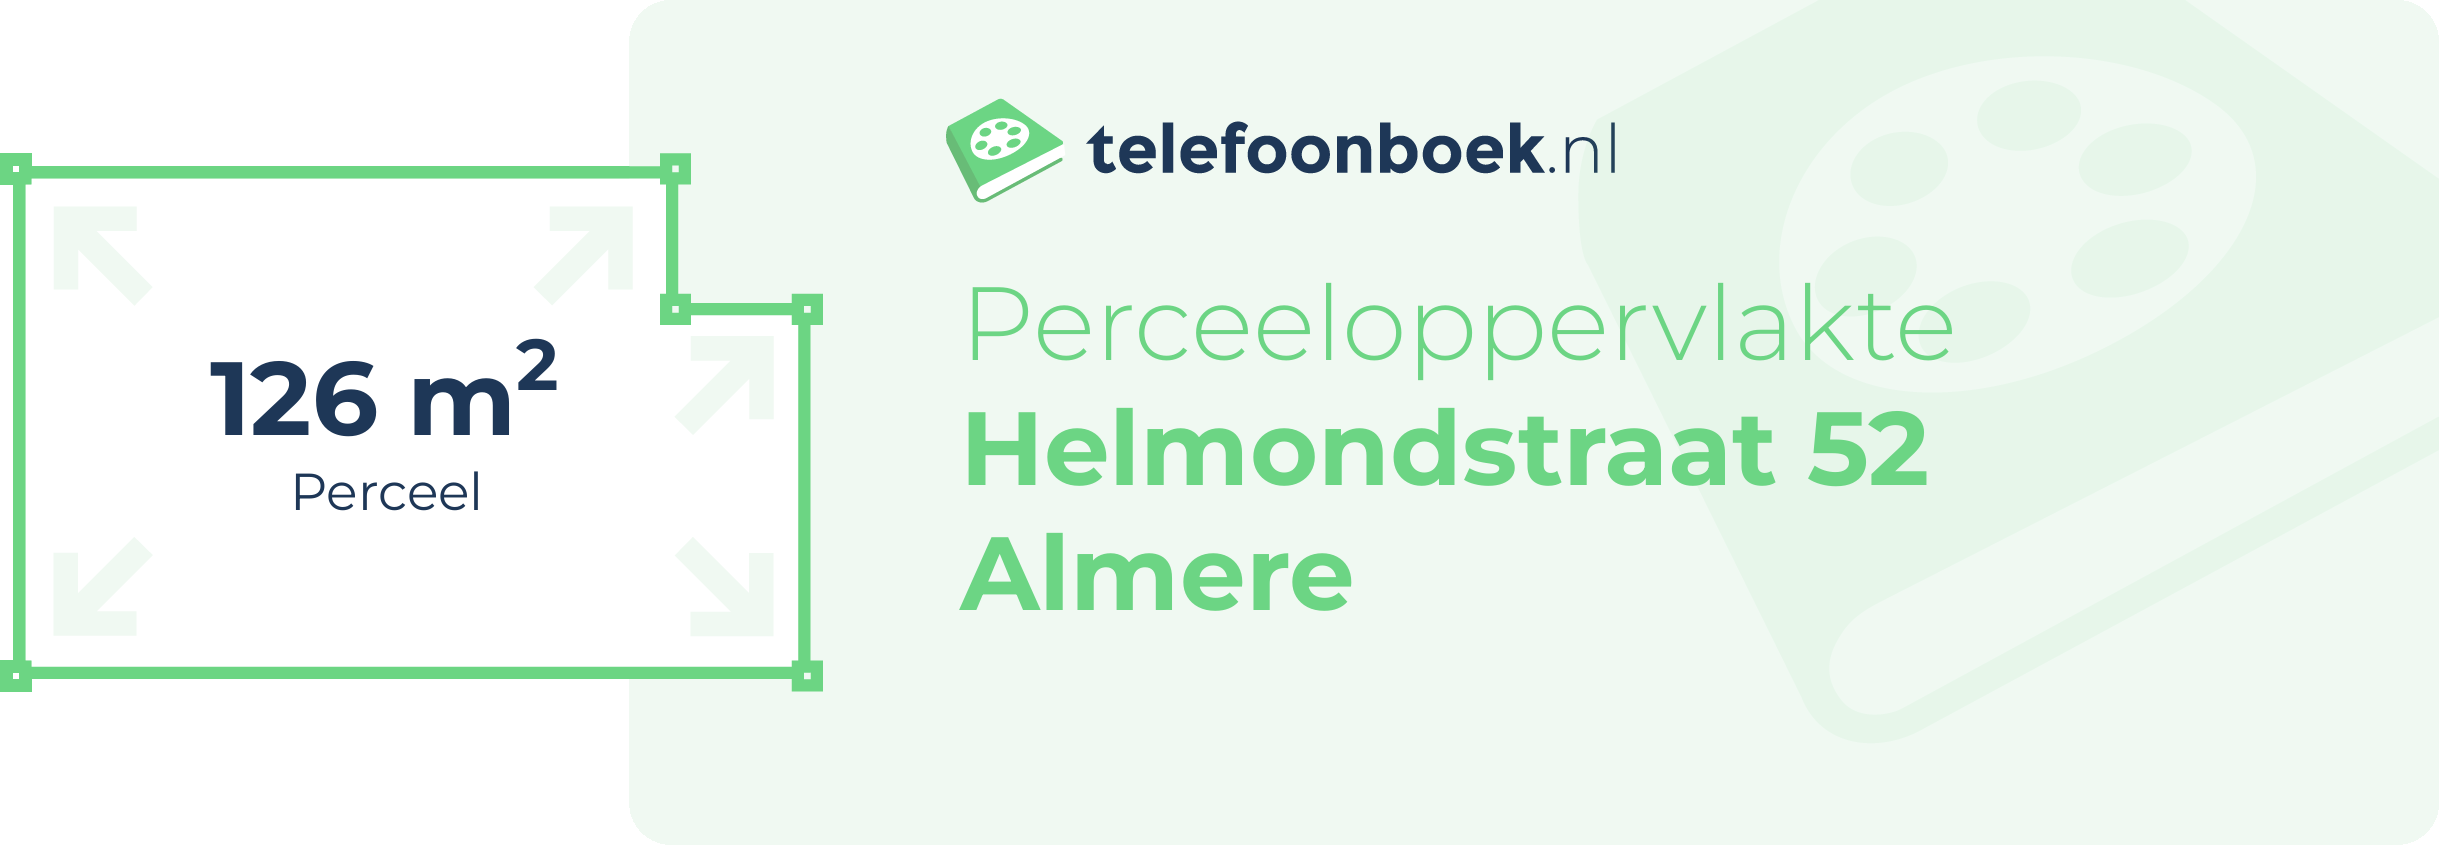 Perceeloppervlakte Helmondstraat 52 Almere